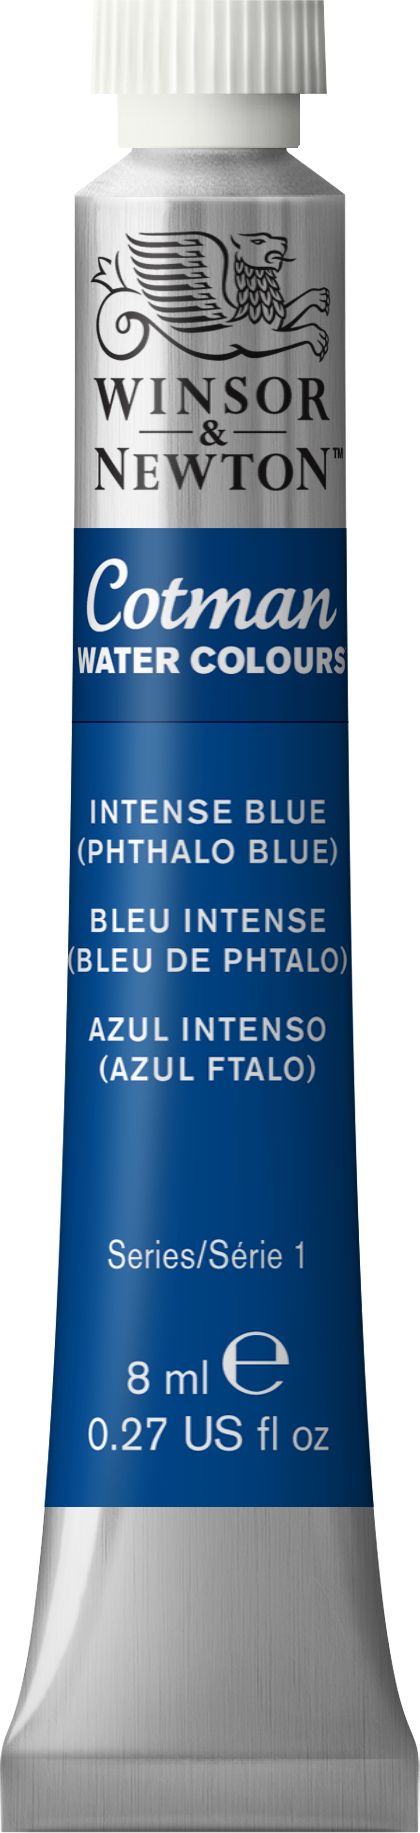 Cotman WC Intense Blue (Phthalo Blue) - 8ml tube